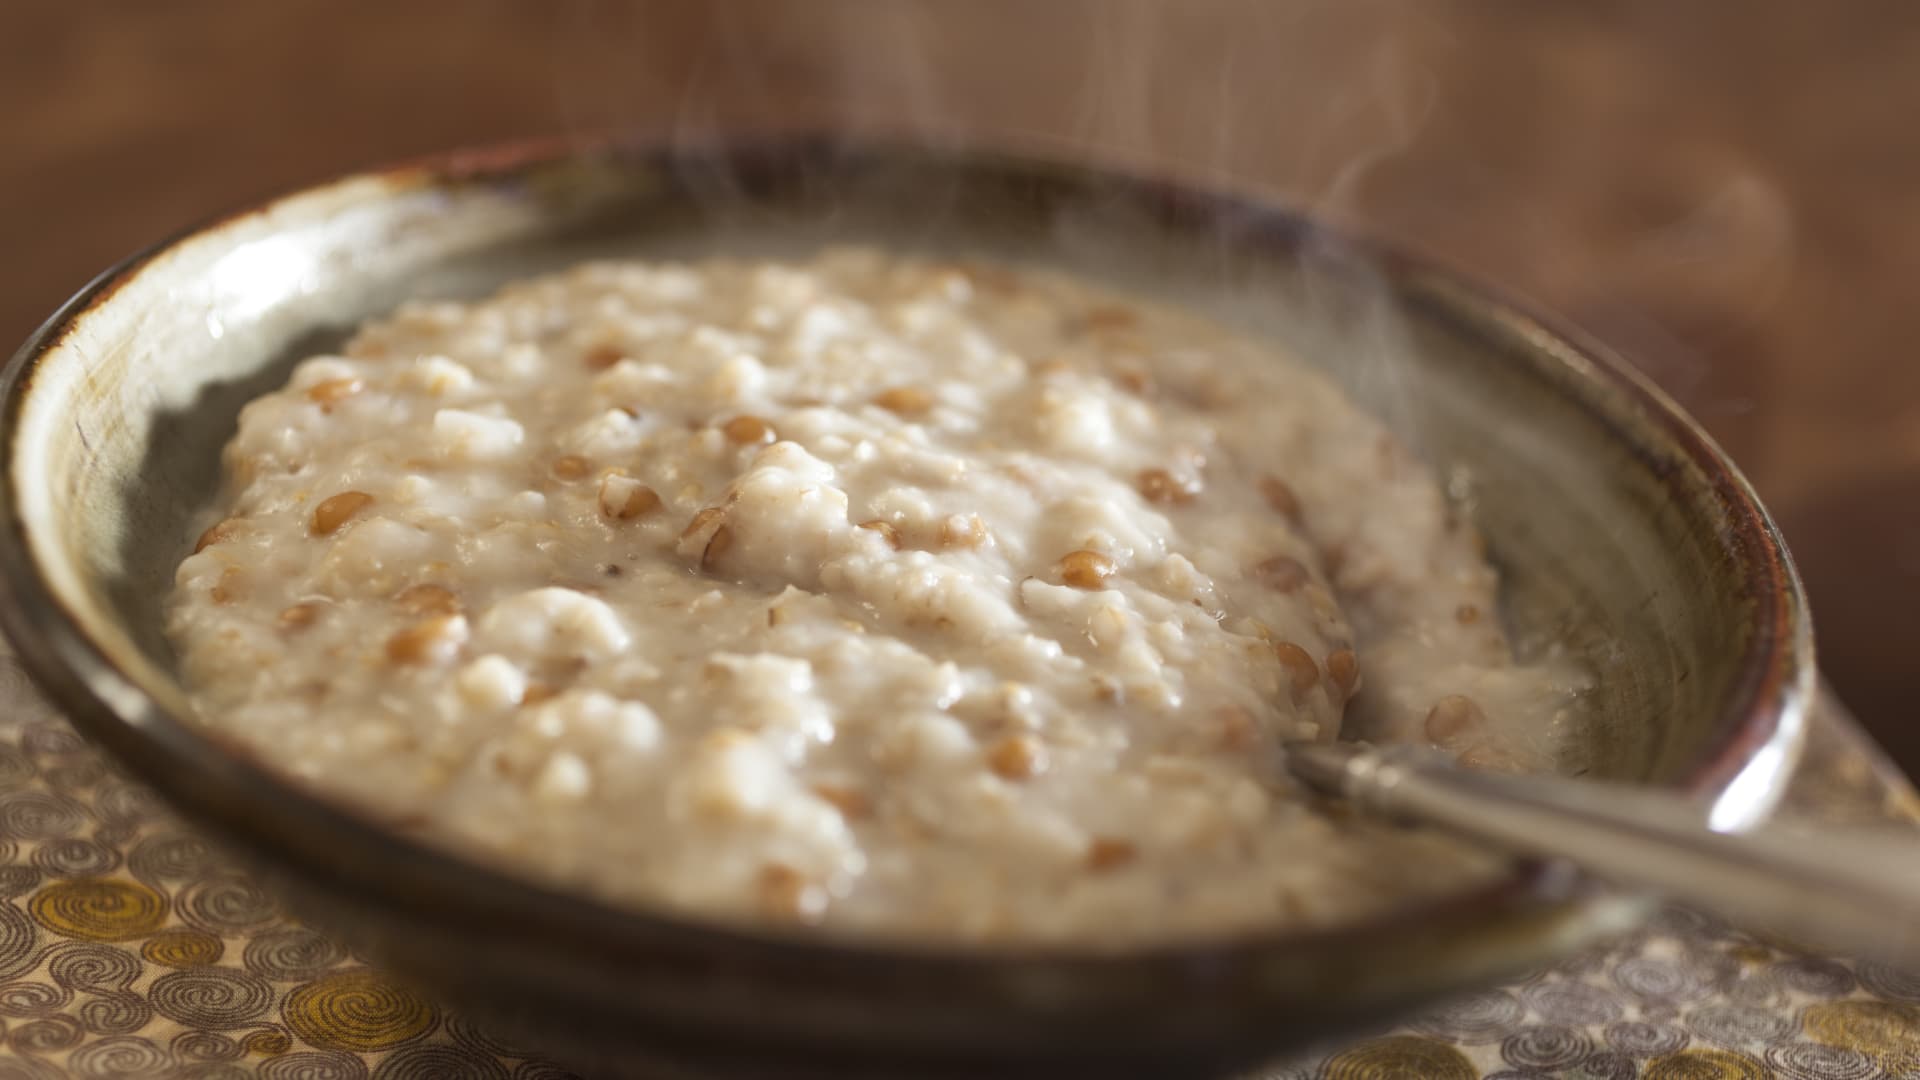 Steaming bowl of oatmeal porridge, made with Irish oats, wheat berries and barley.